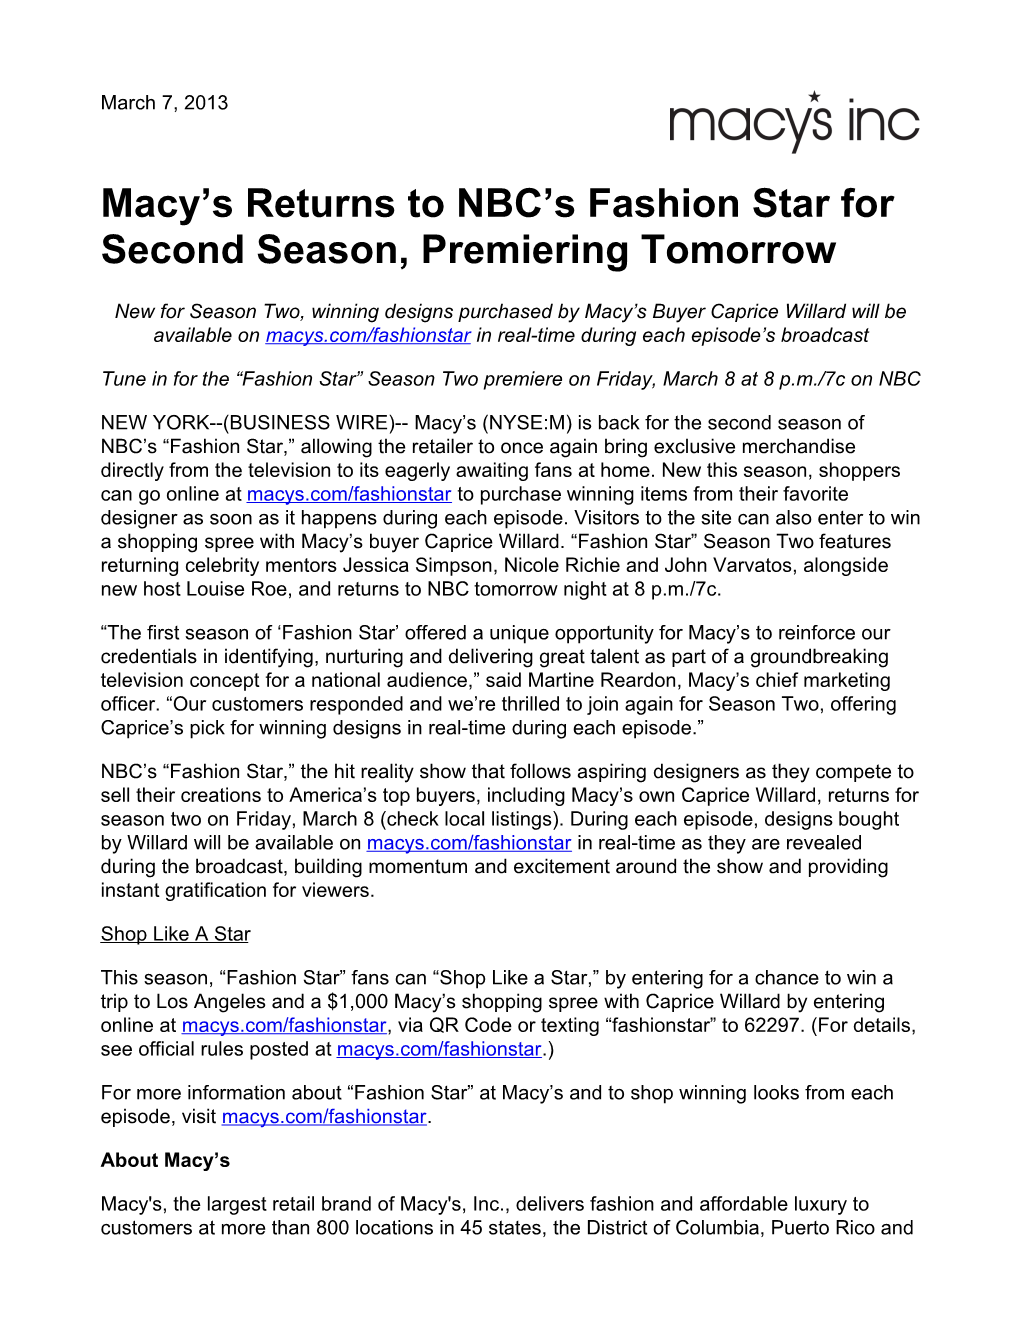 Macy's Returns to NBC's Fashion Star for Second Season, Premiering